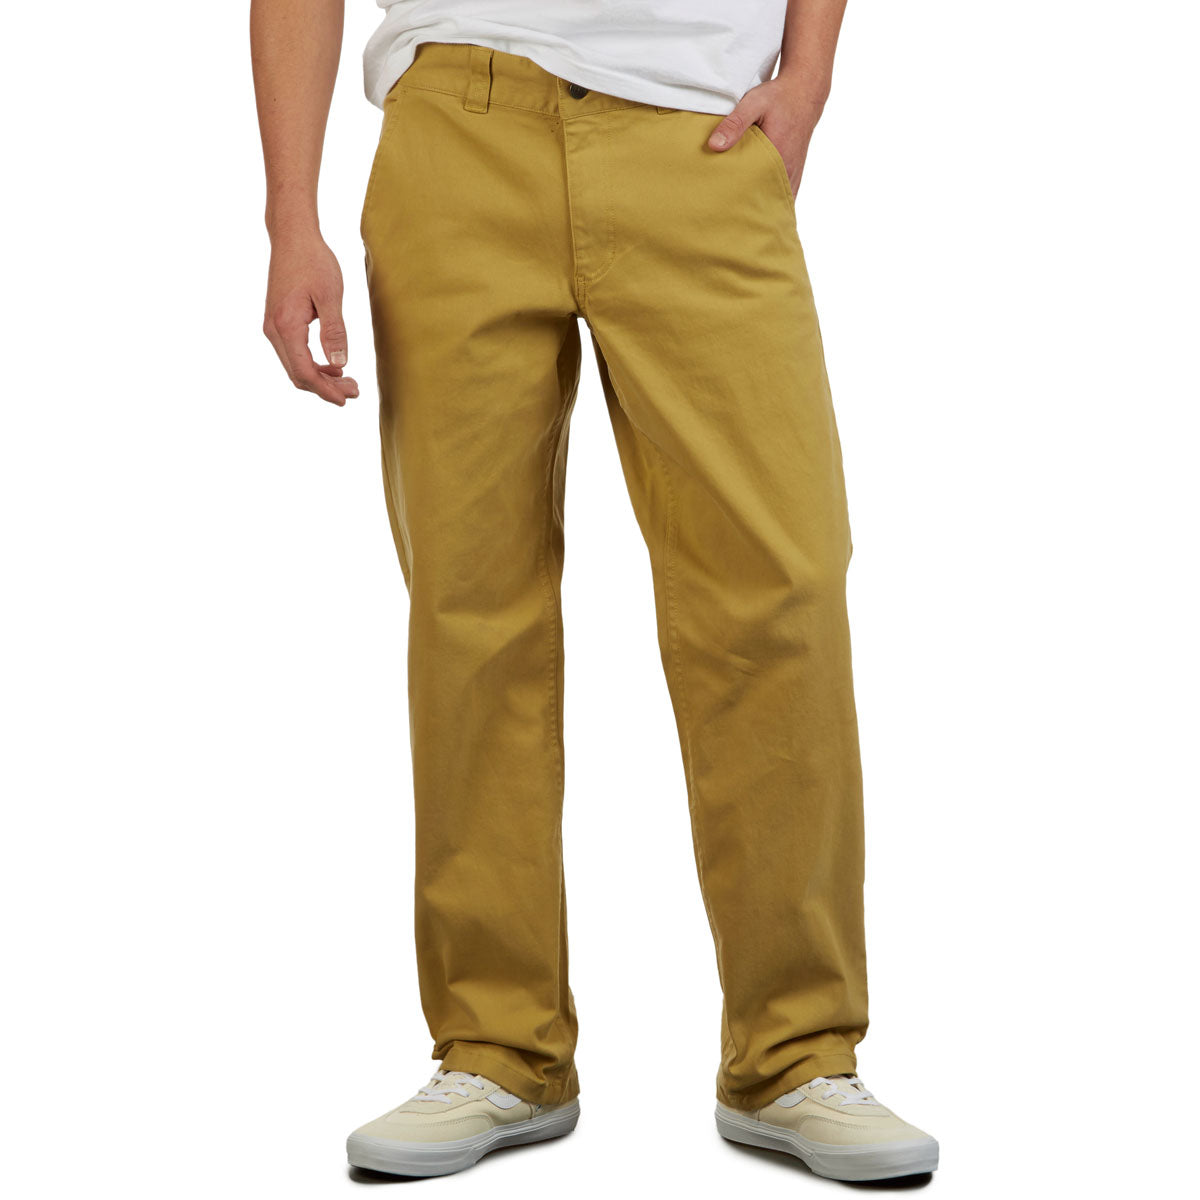 CCS Standard Plus Relaxed Chino Pants - Dark Mustard image 1